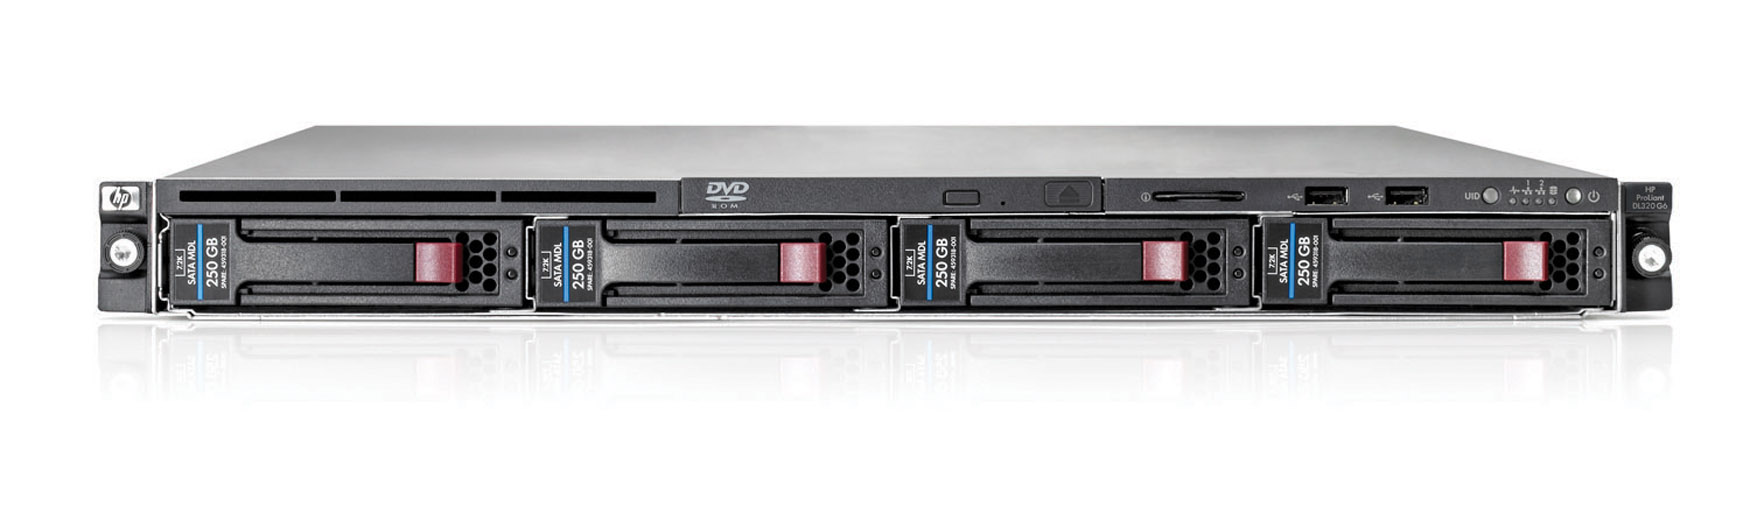 Сервер HP DL320 G6